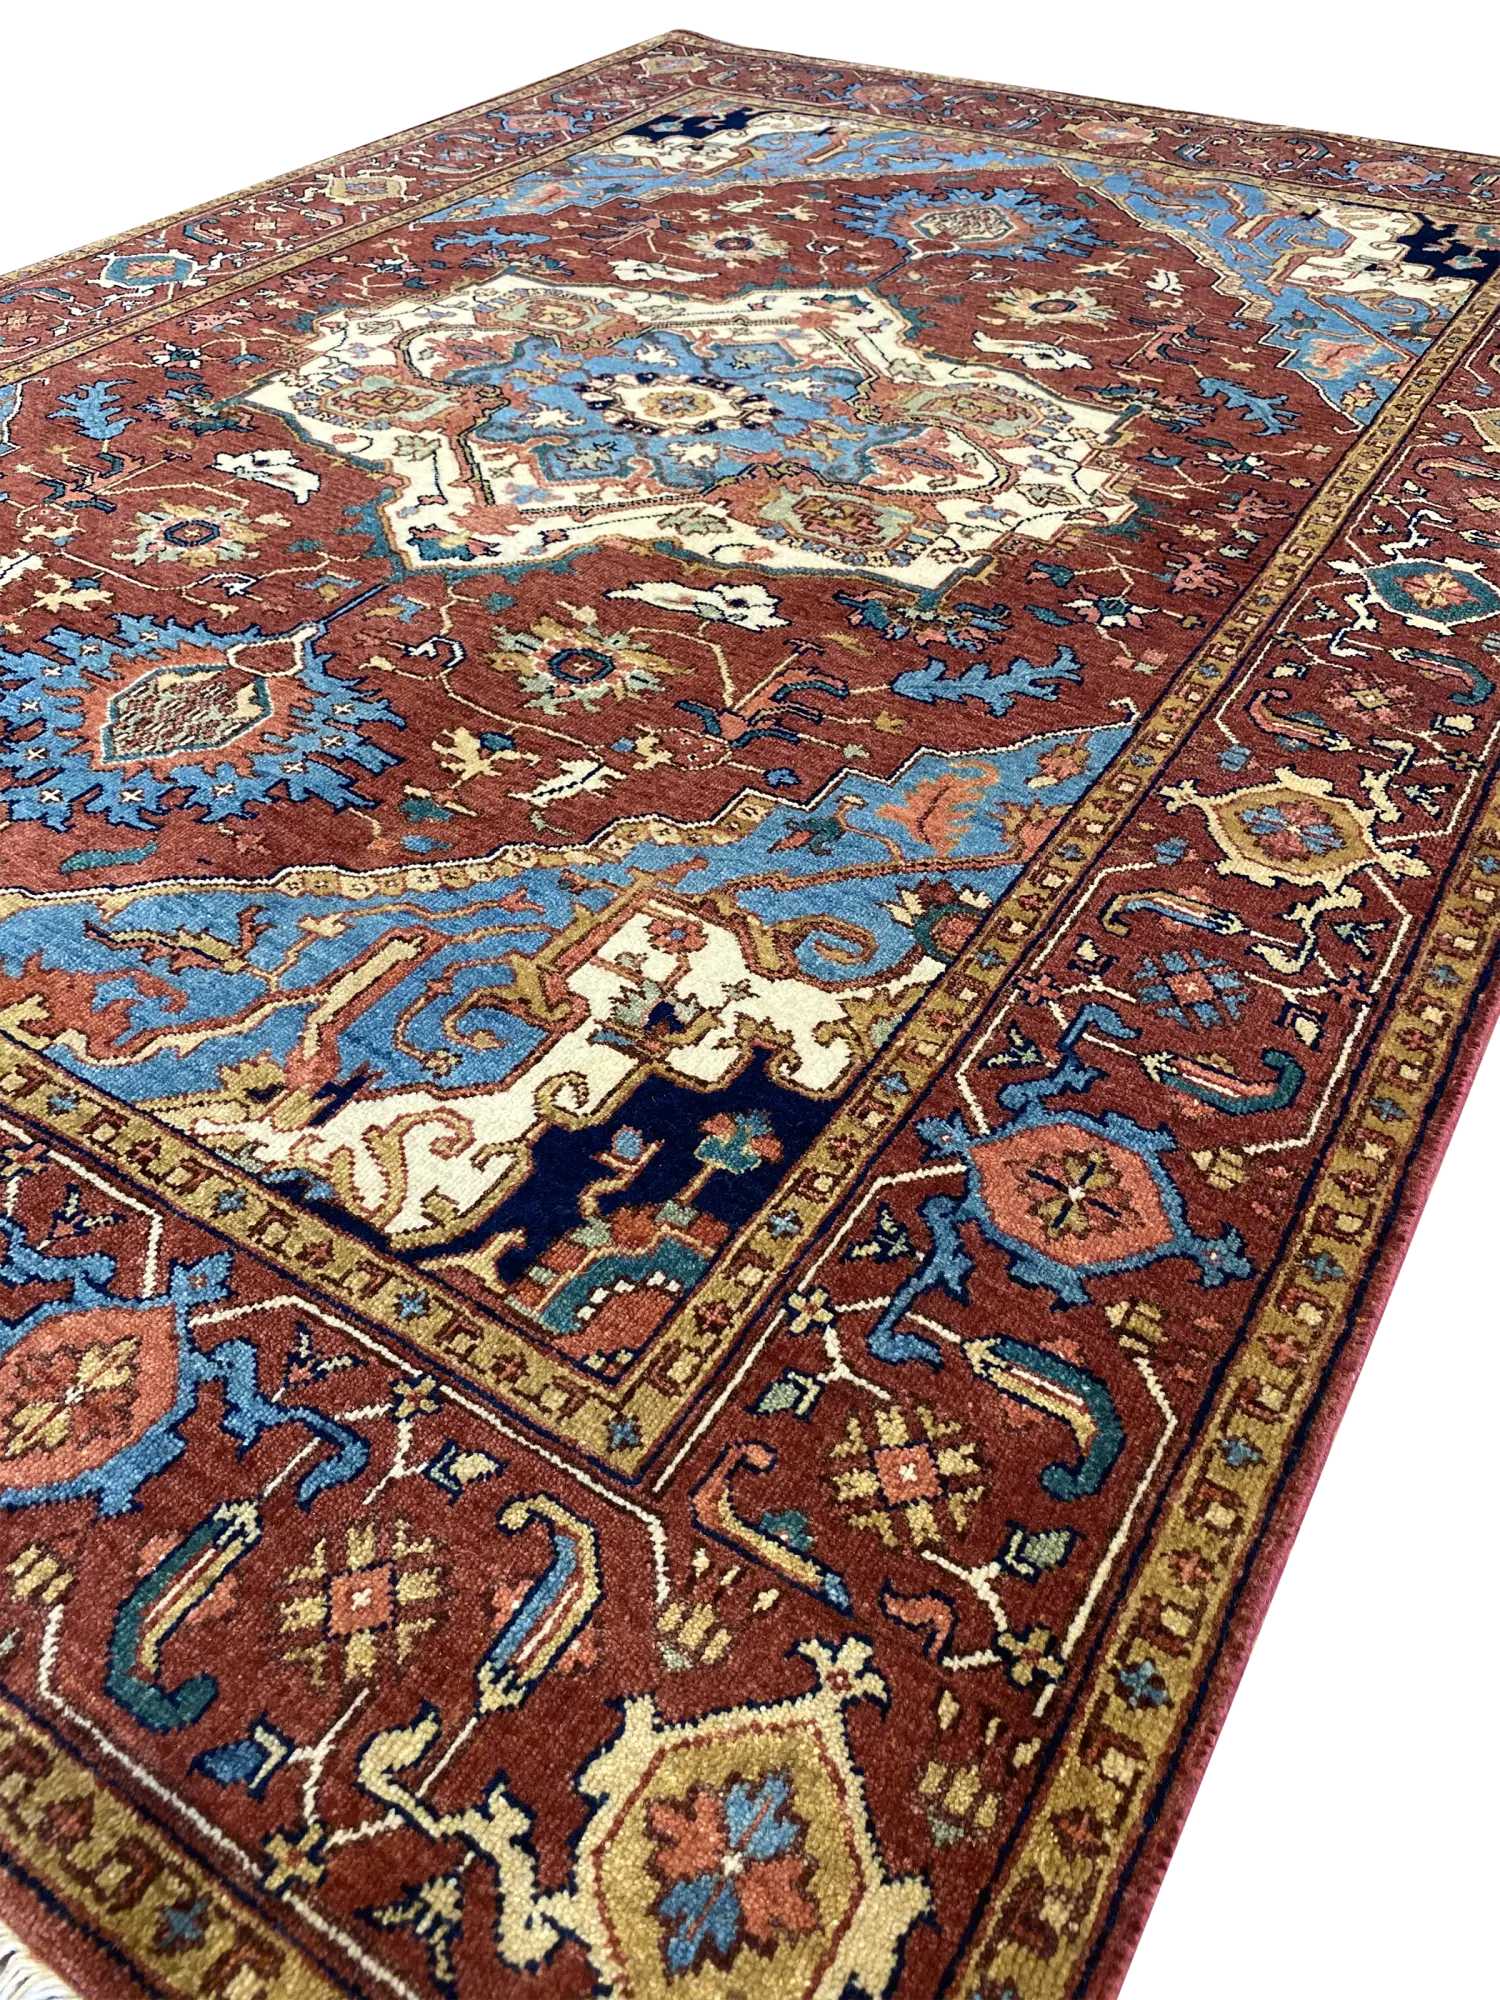 Heriz 5' x 6' 10" Wool Handmade Area Rug - Shabahang Royal Carpet